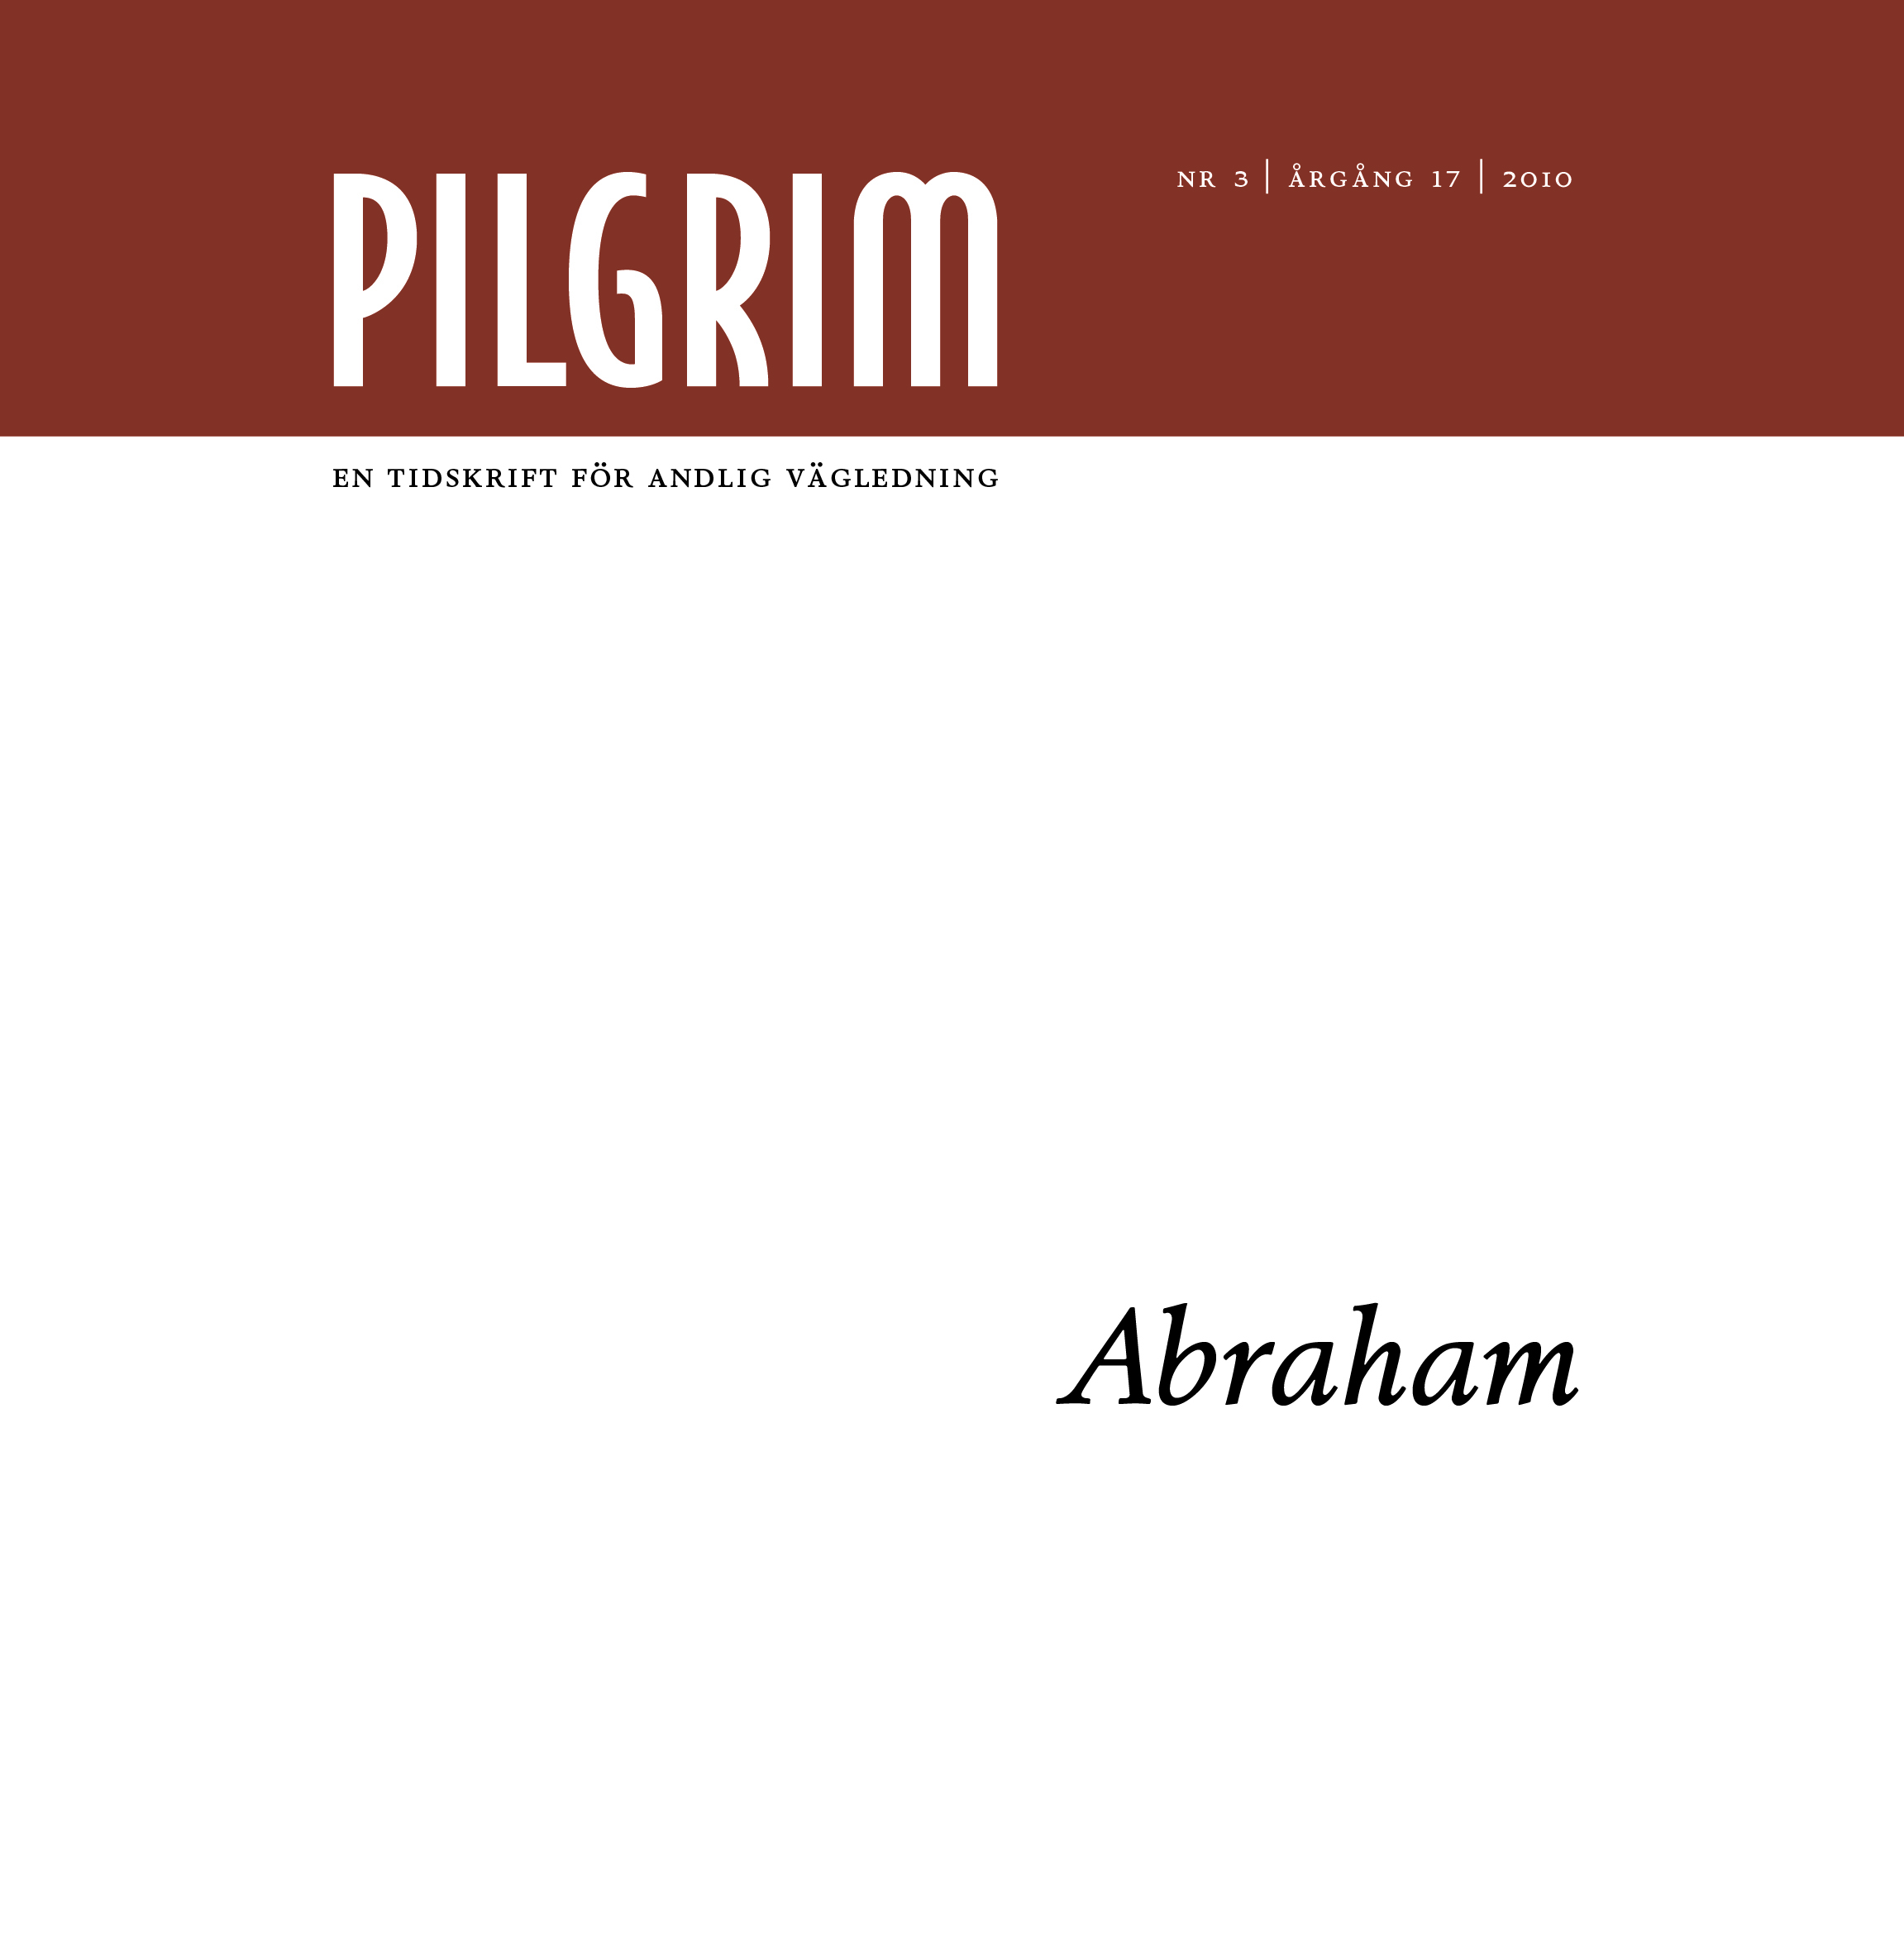 Pilgrim frams 2010-3